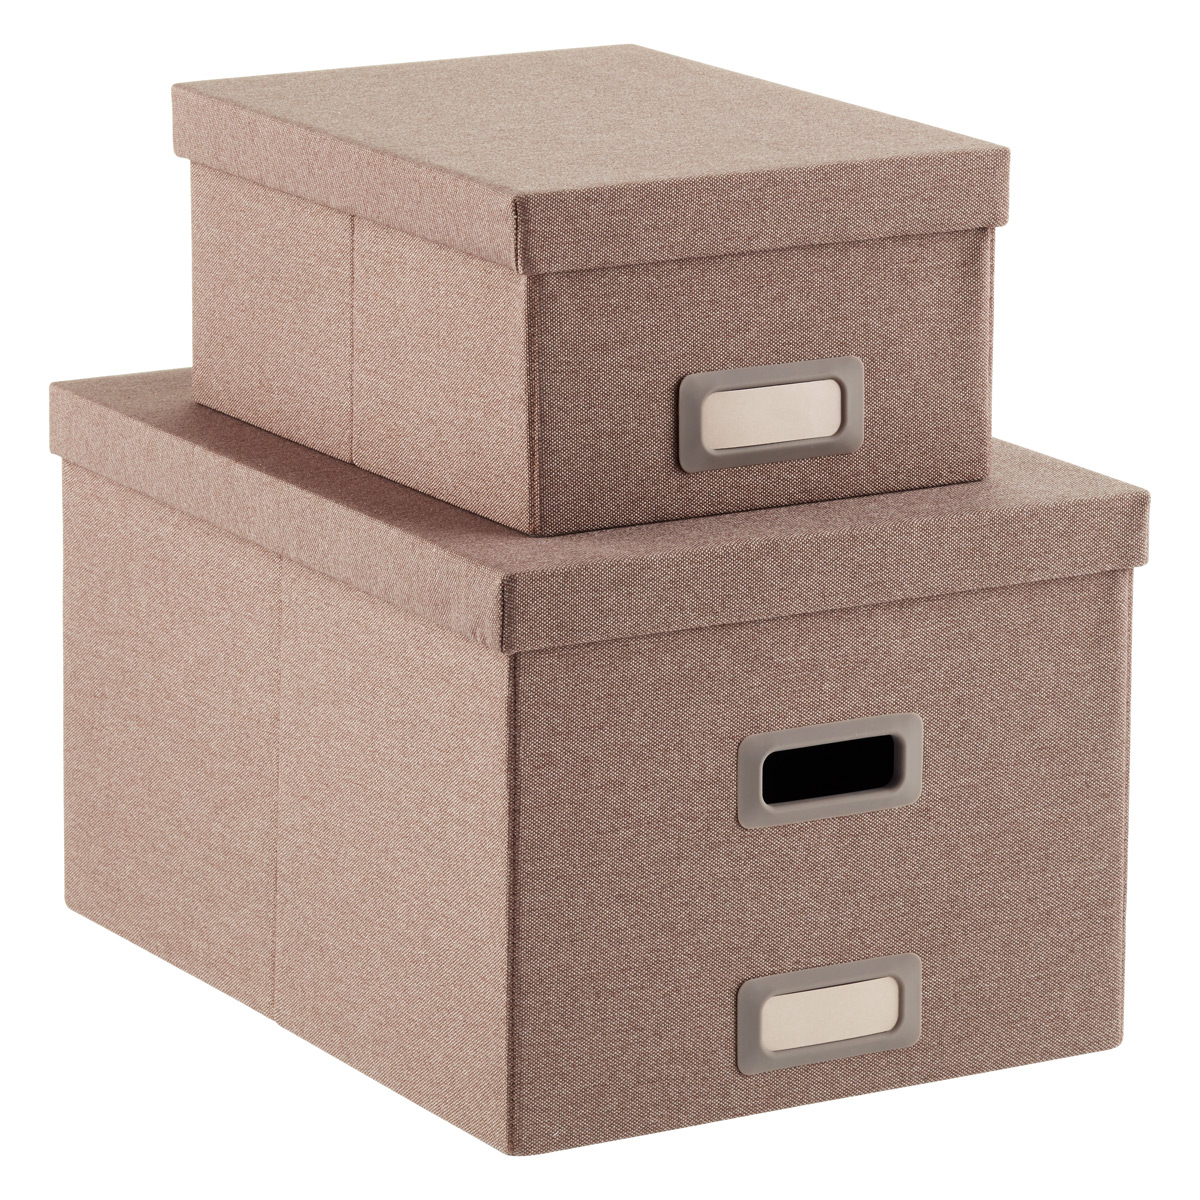 Benefits of having storage boxes